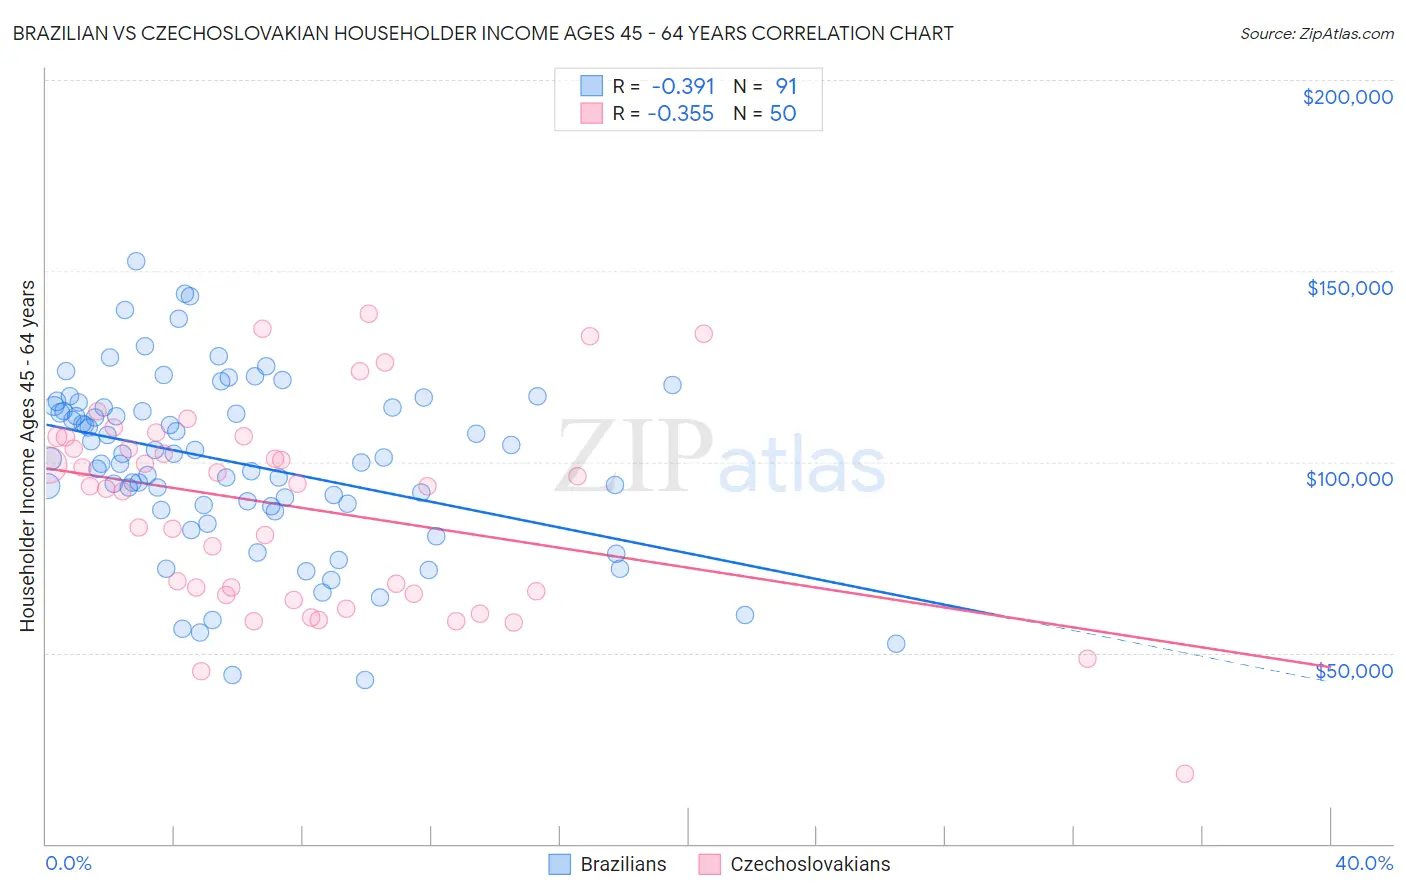 Brazilian vs Czechoslovakian Householder Income Ages 45 - 64 years